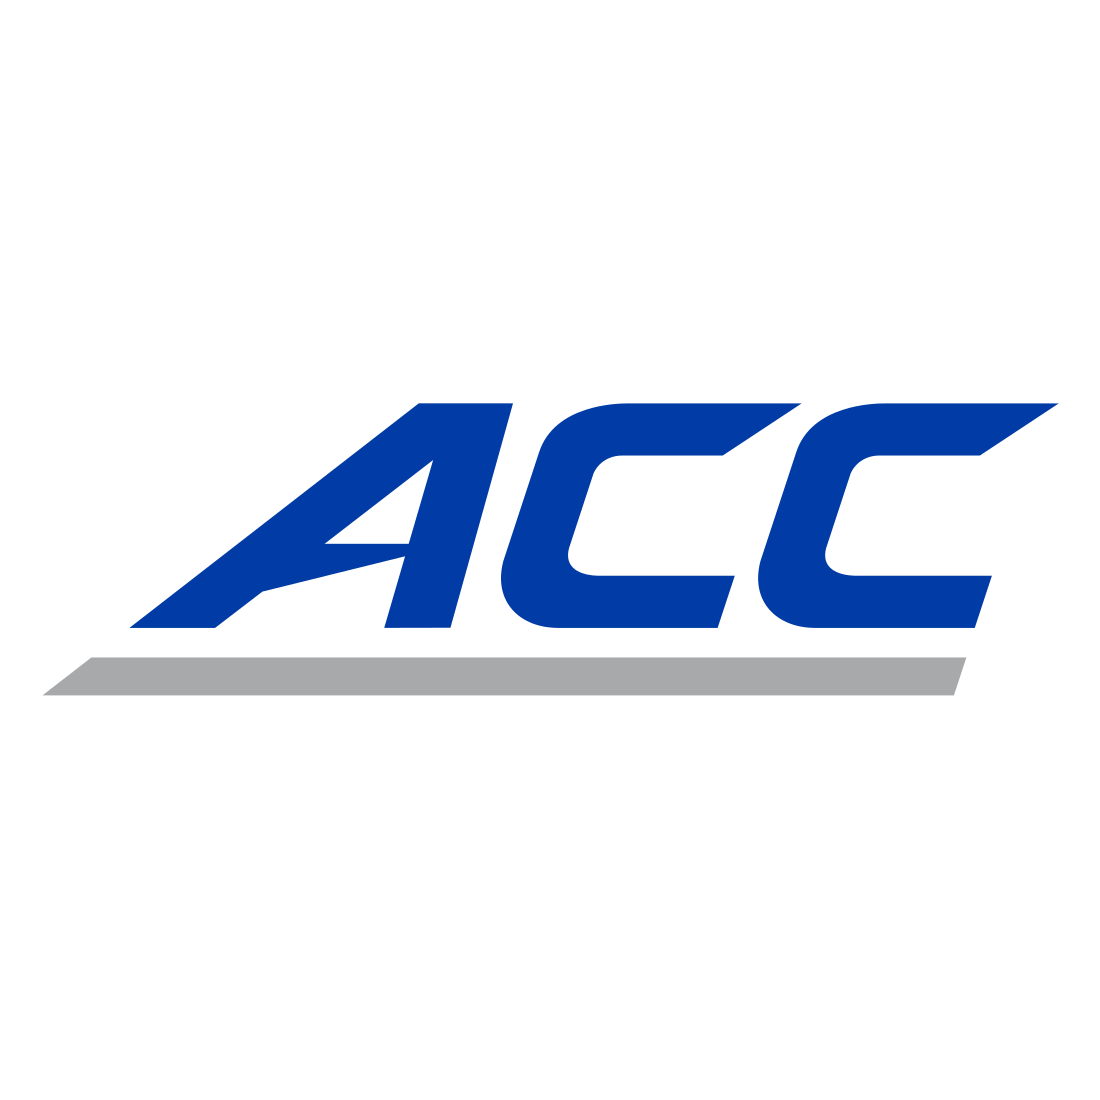 Atlantic Coast Conference ACC logo